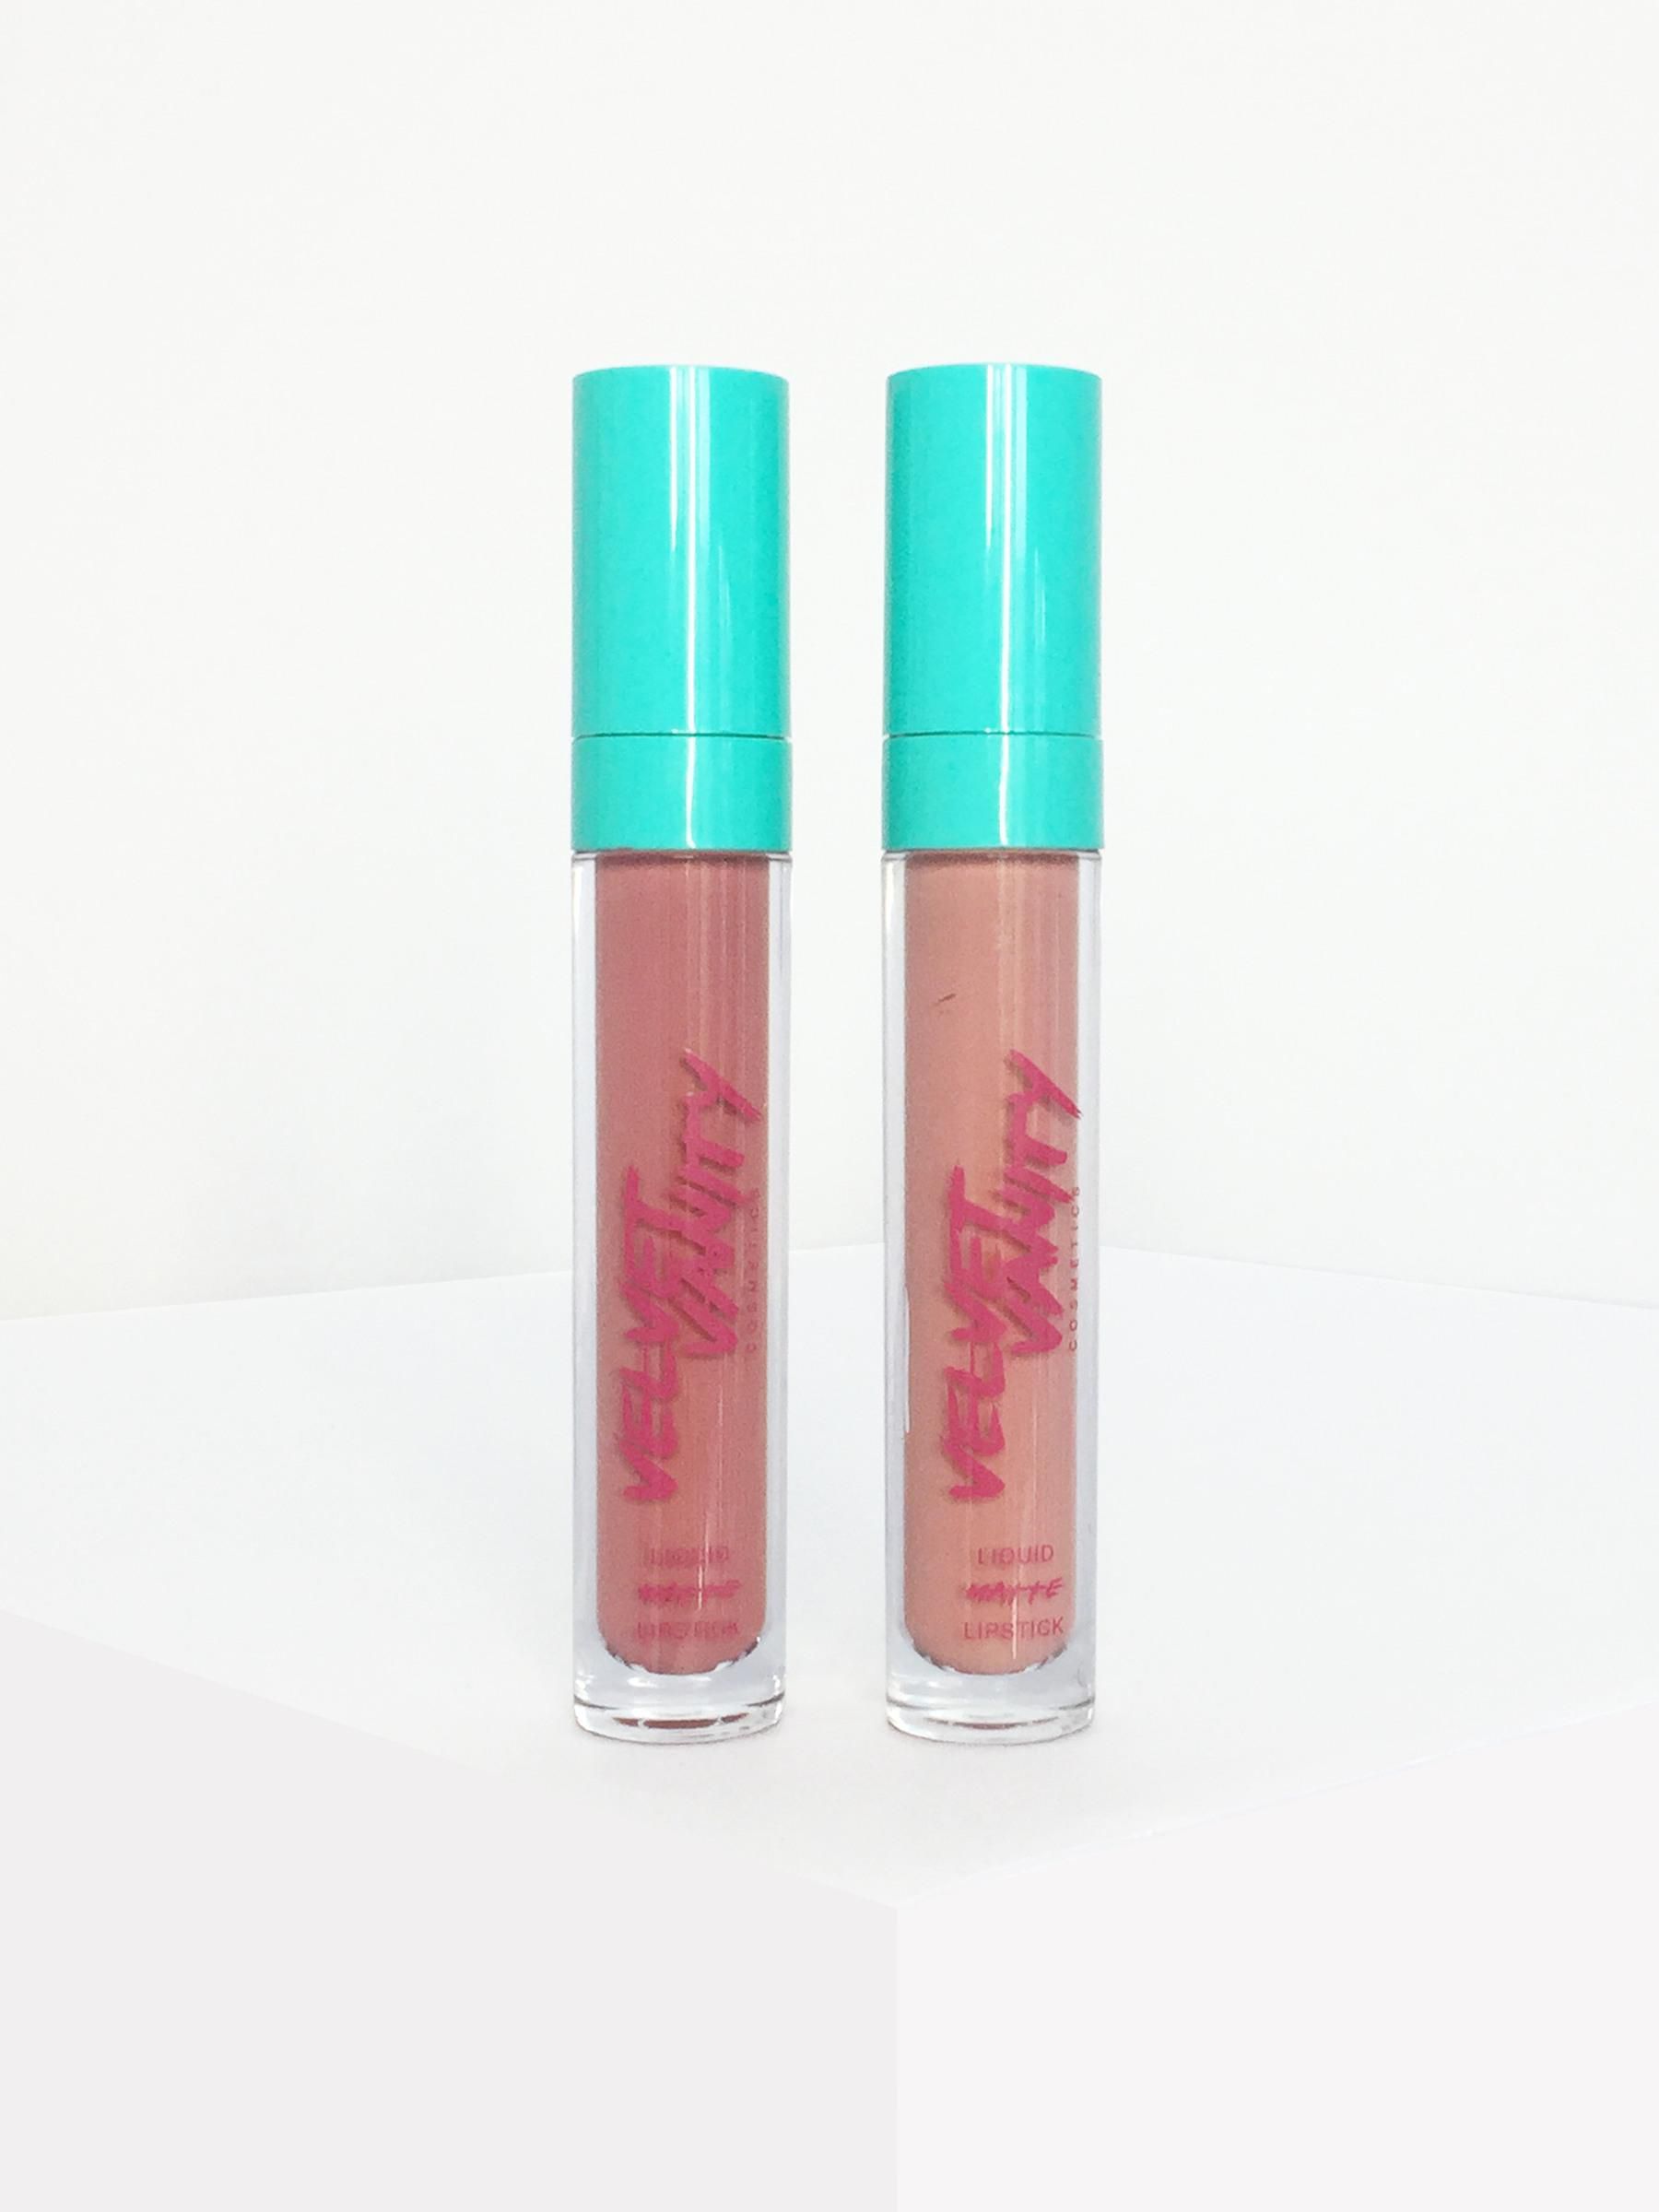 Velvetvanitycosmetics Monochrome Madness Liquid Matte Lipstick (2 Colors)